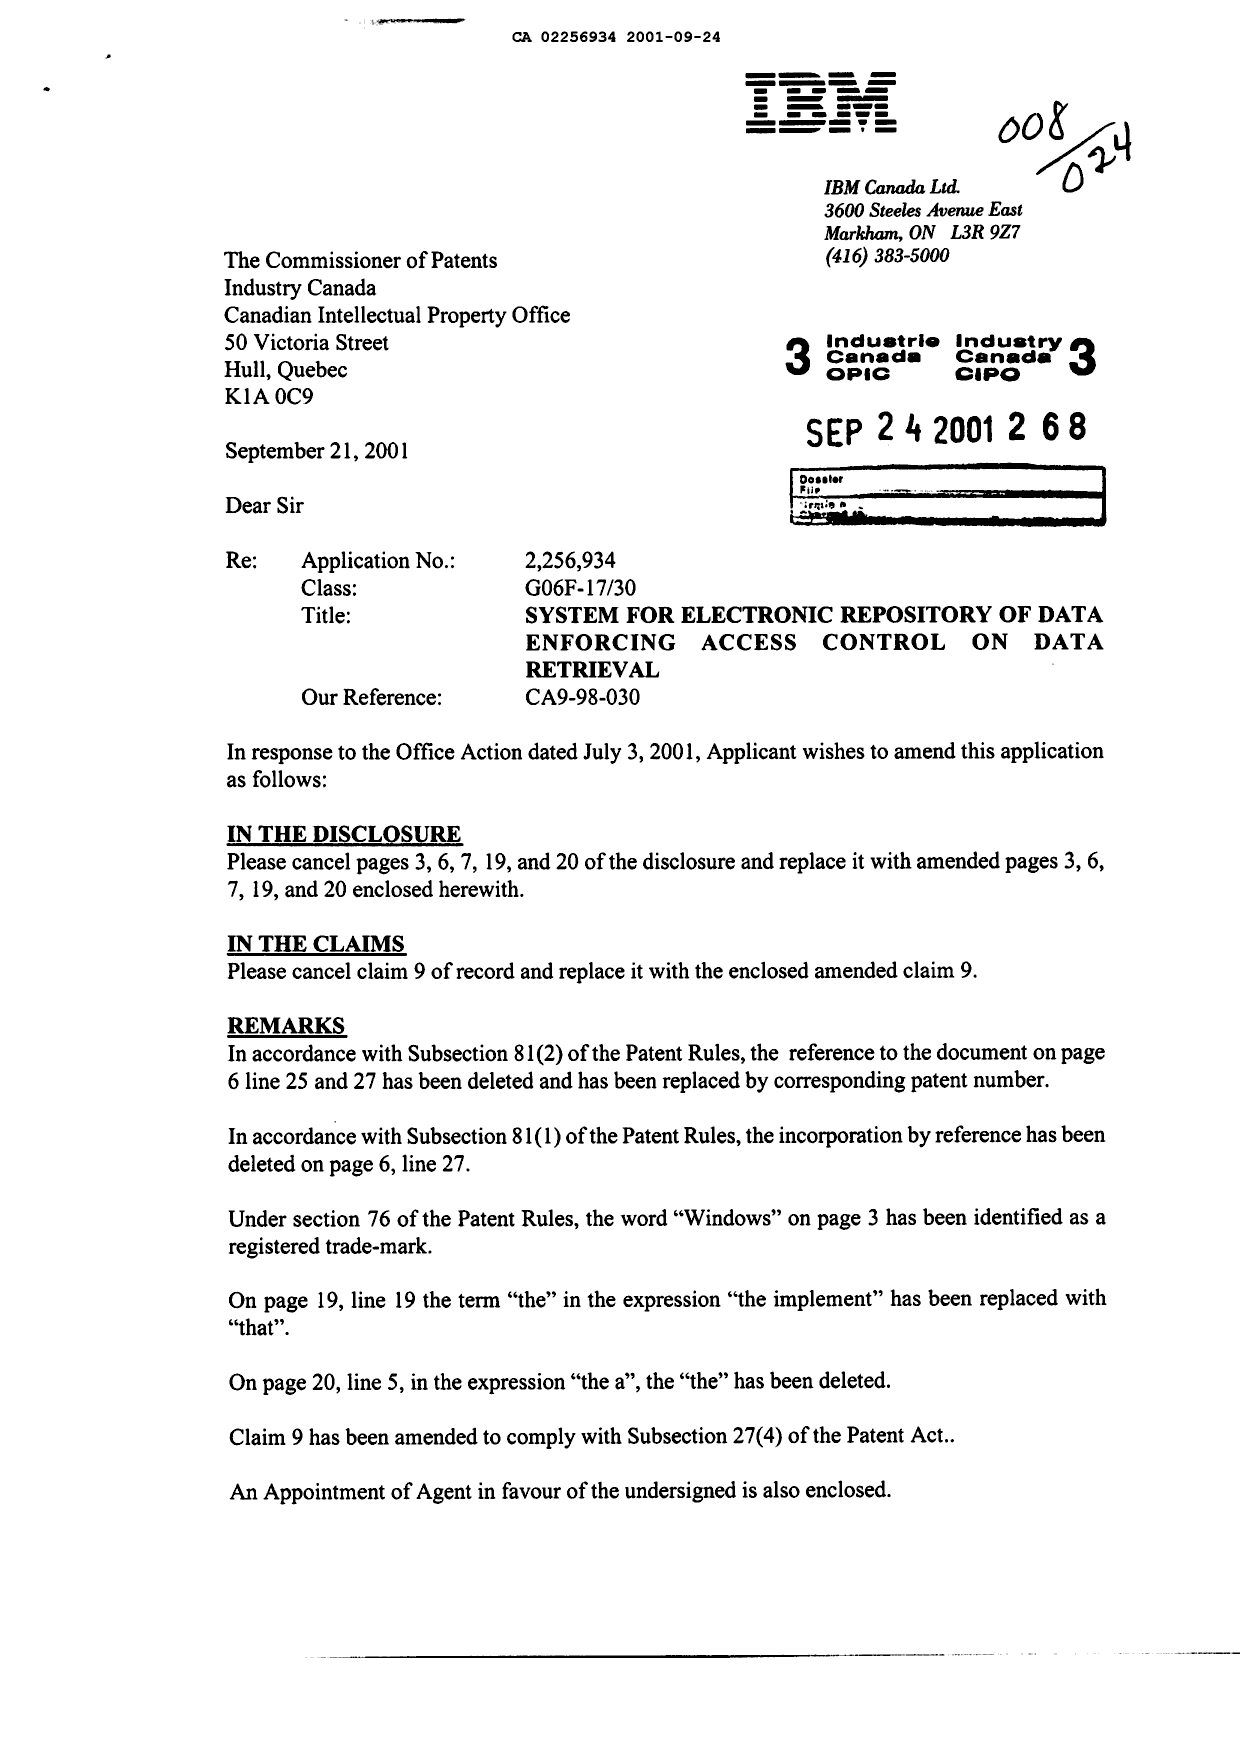 Canadian Patent Document 2256934. Correspondence 20010924. Image 1 of 3